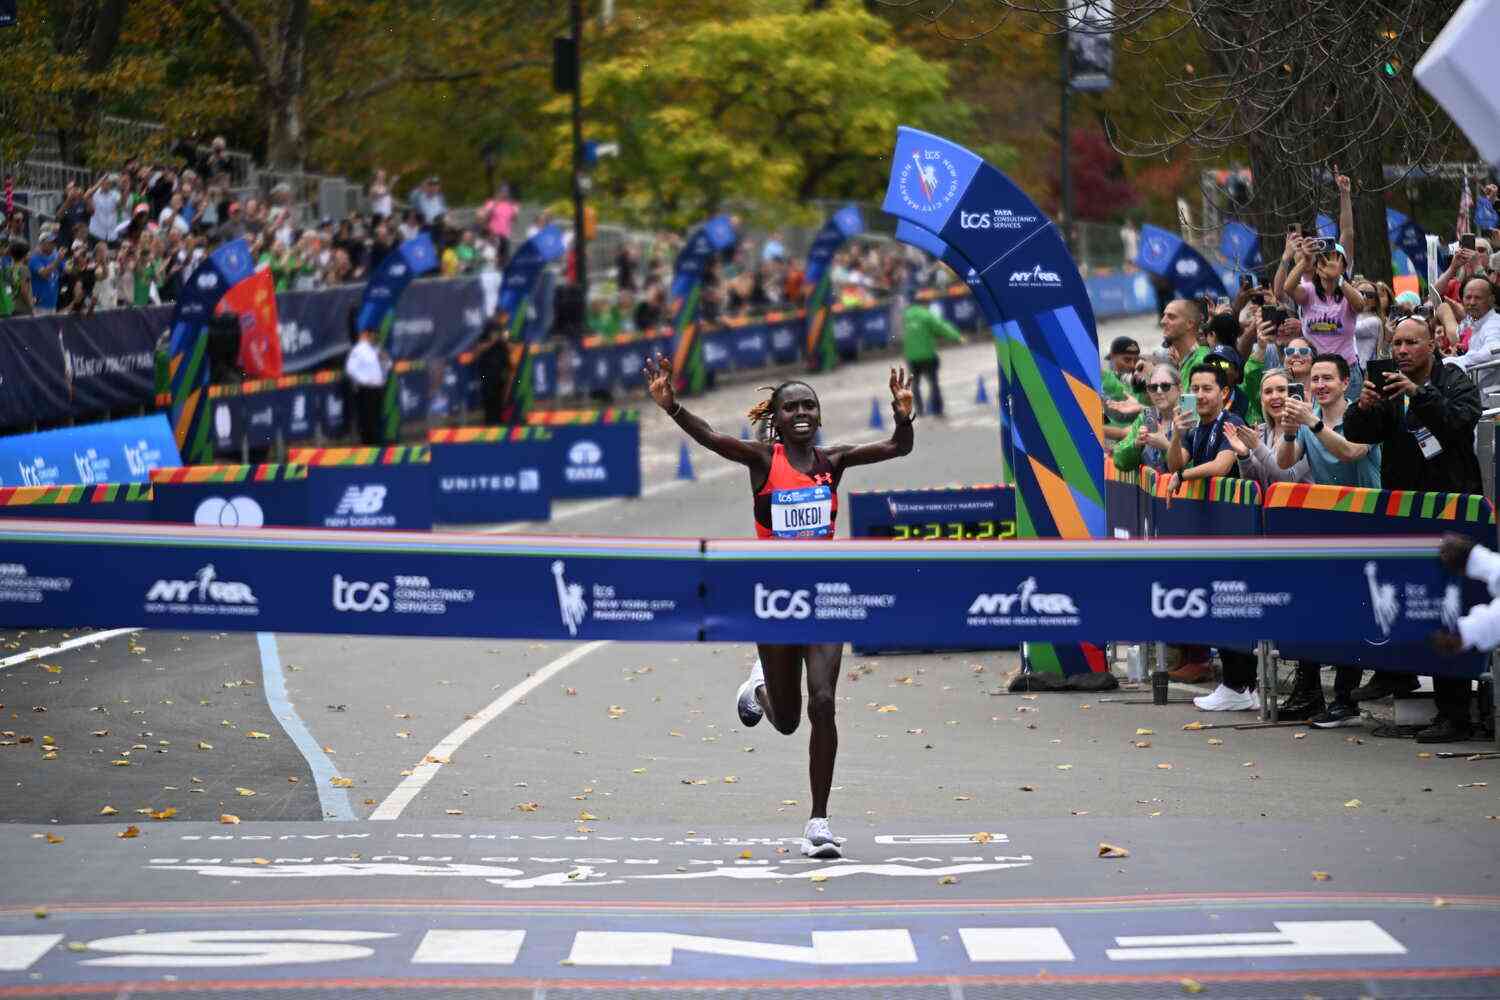 New York City Marathon Women’s Race: Lookedi and Chebet Win the Women’s Race